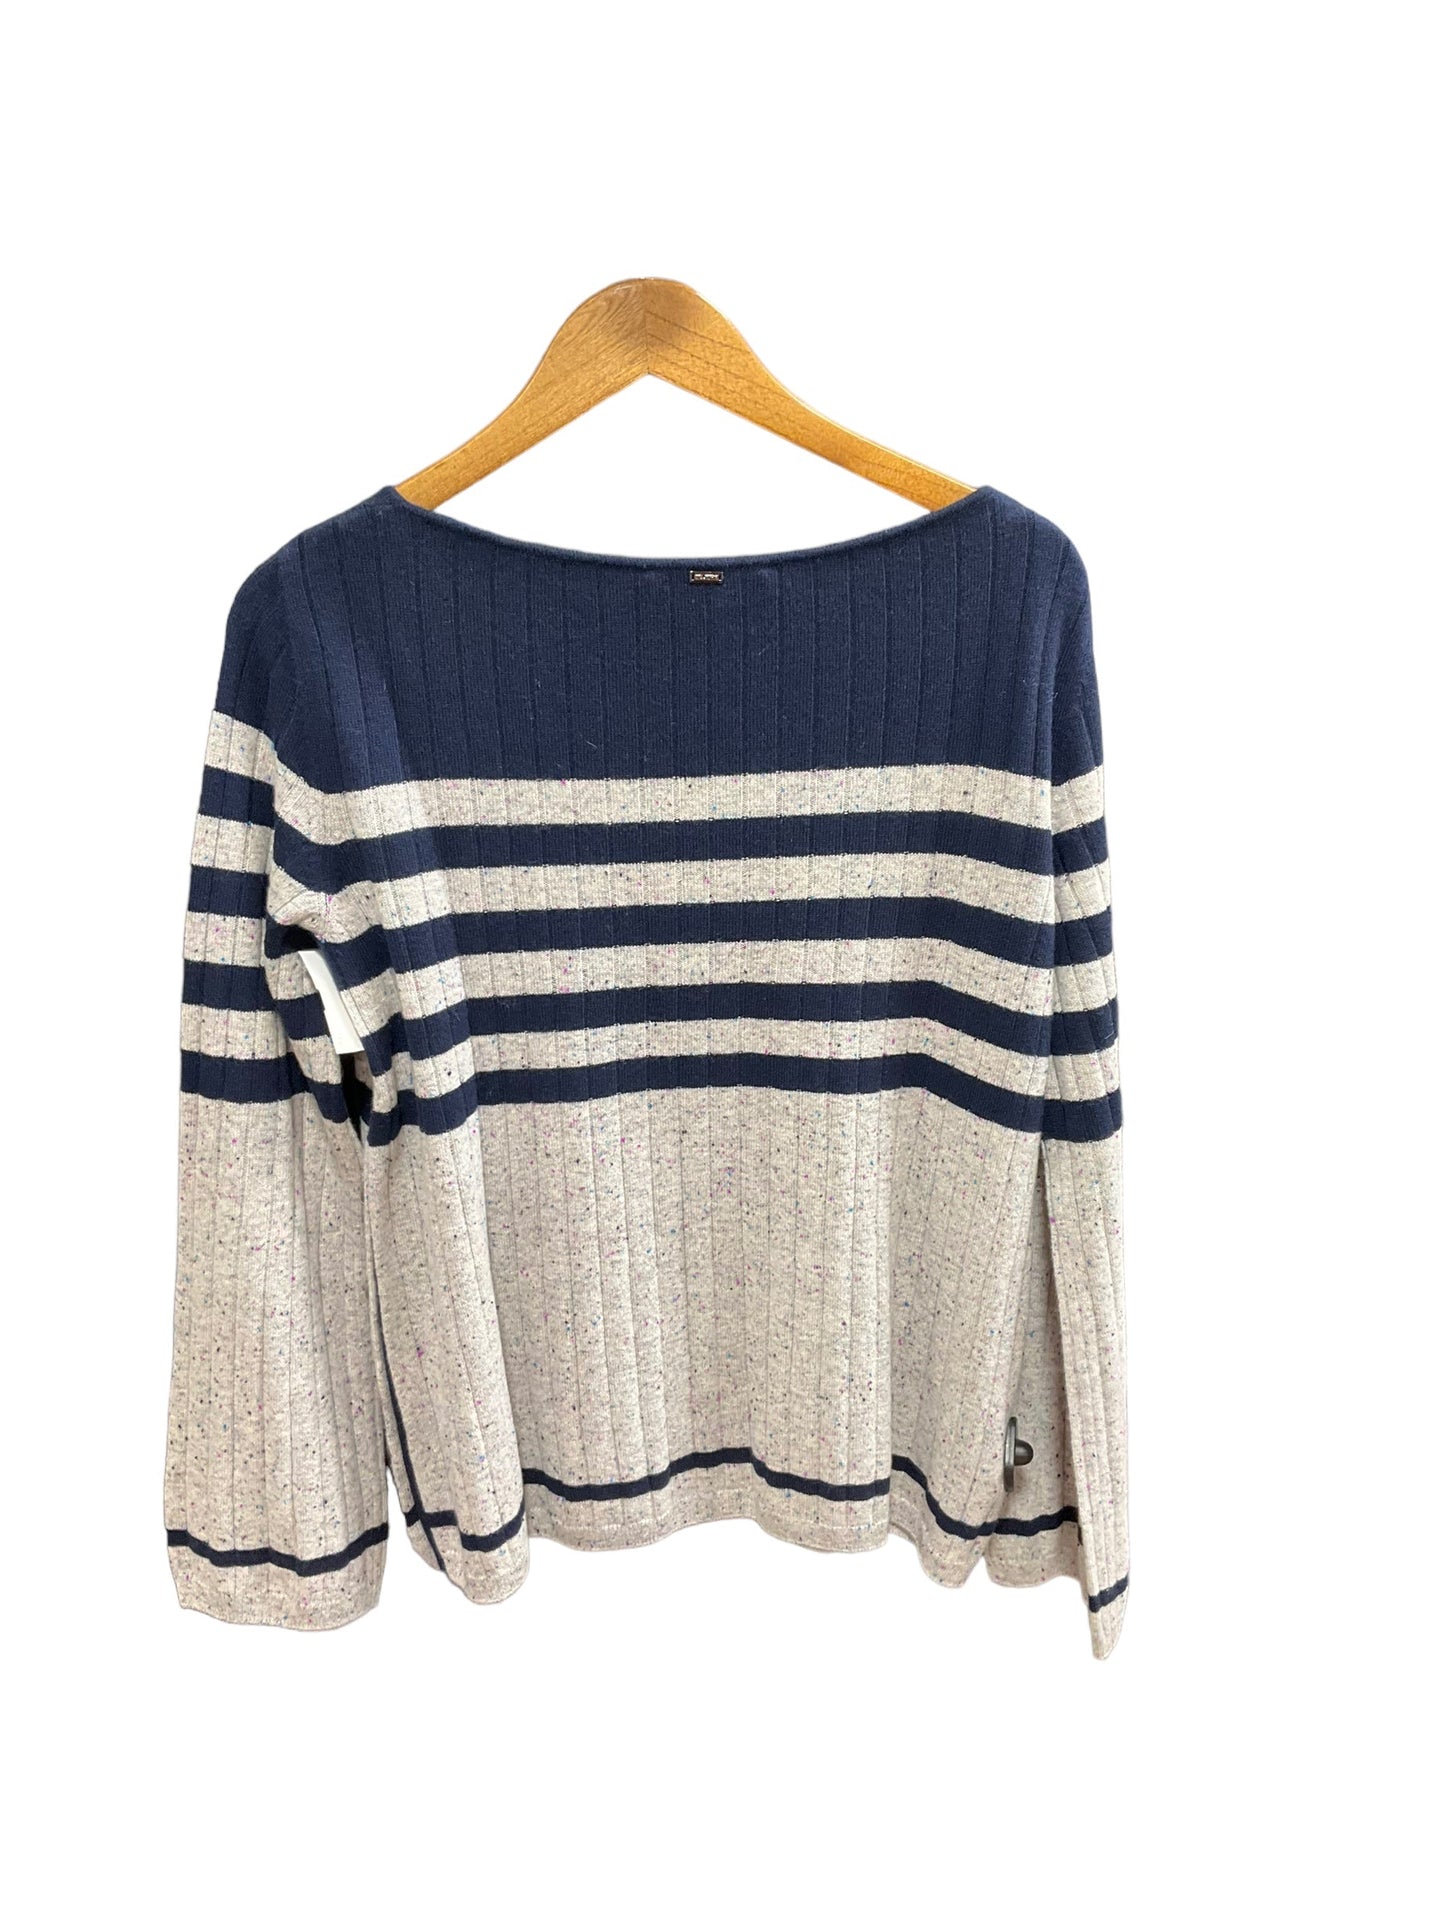 Sweater Designer By St. John  Size: M